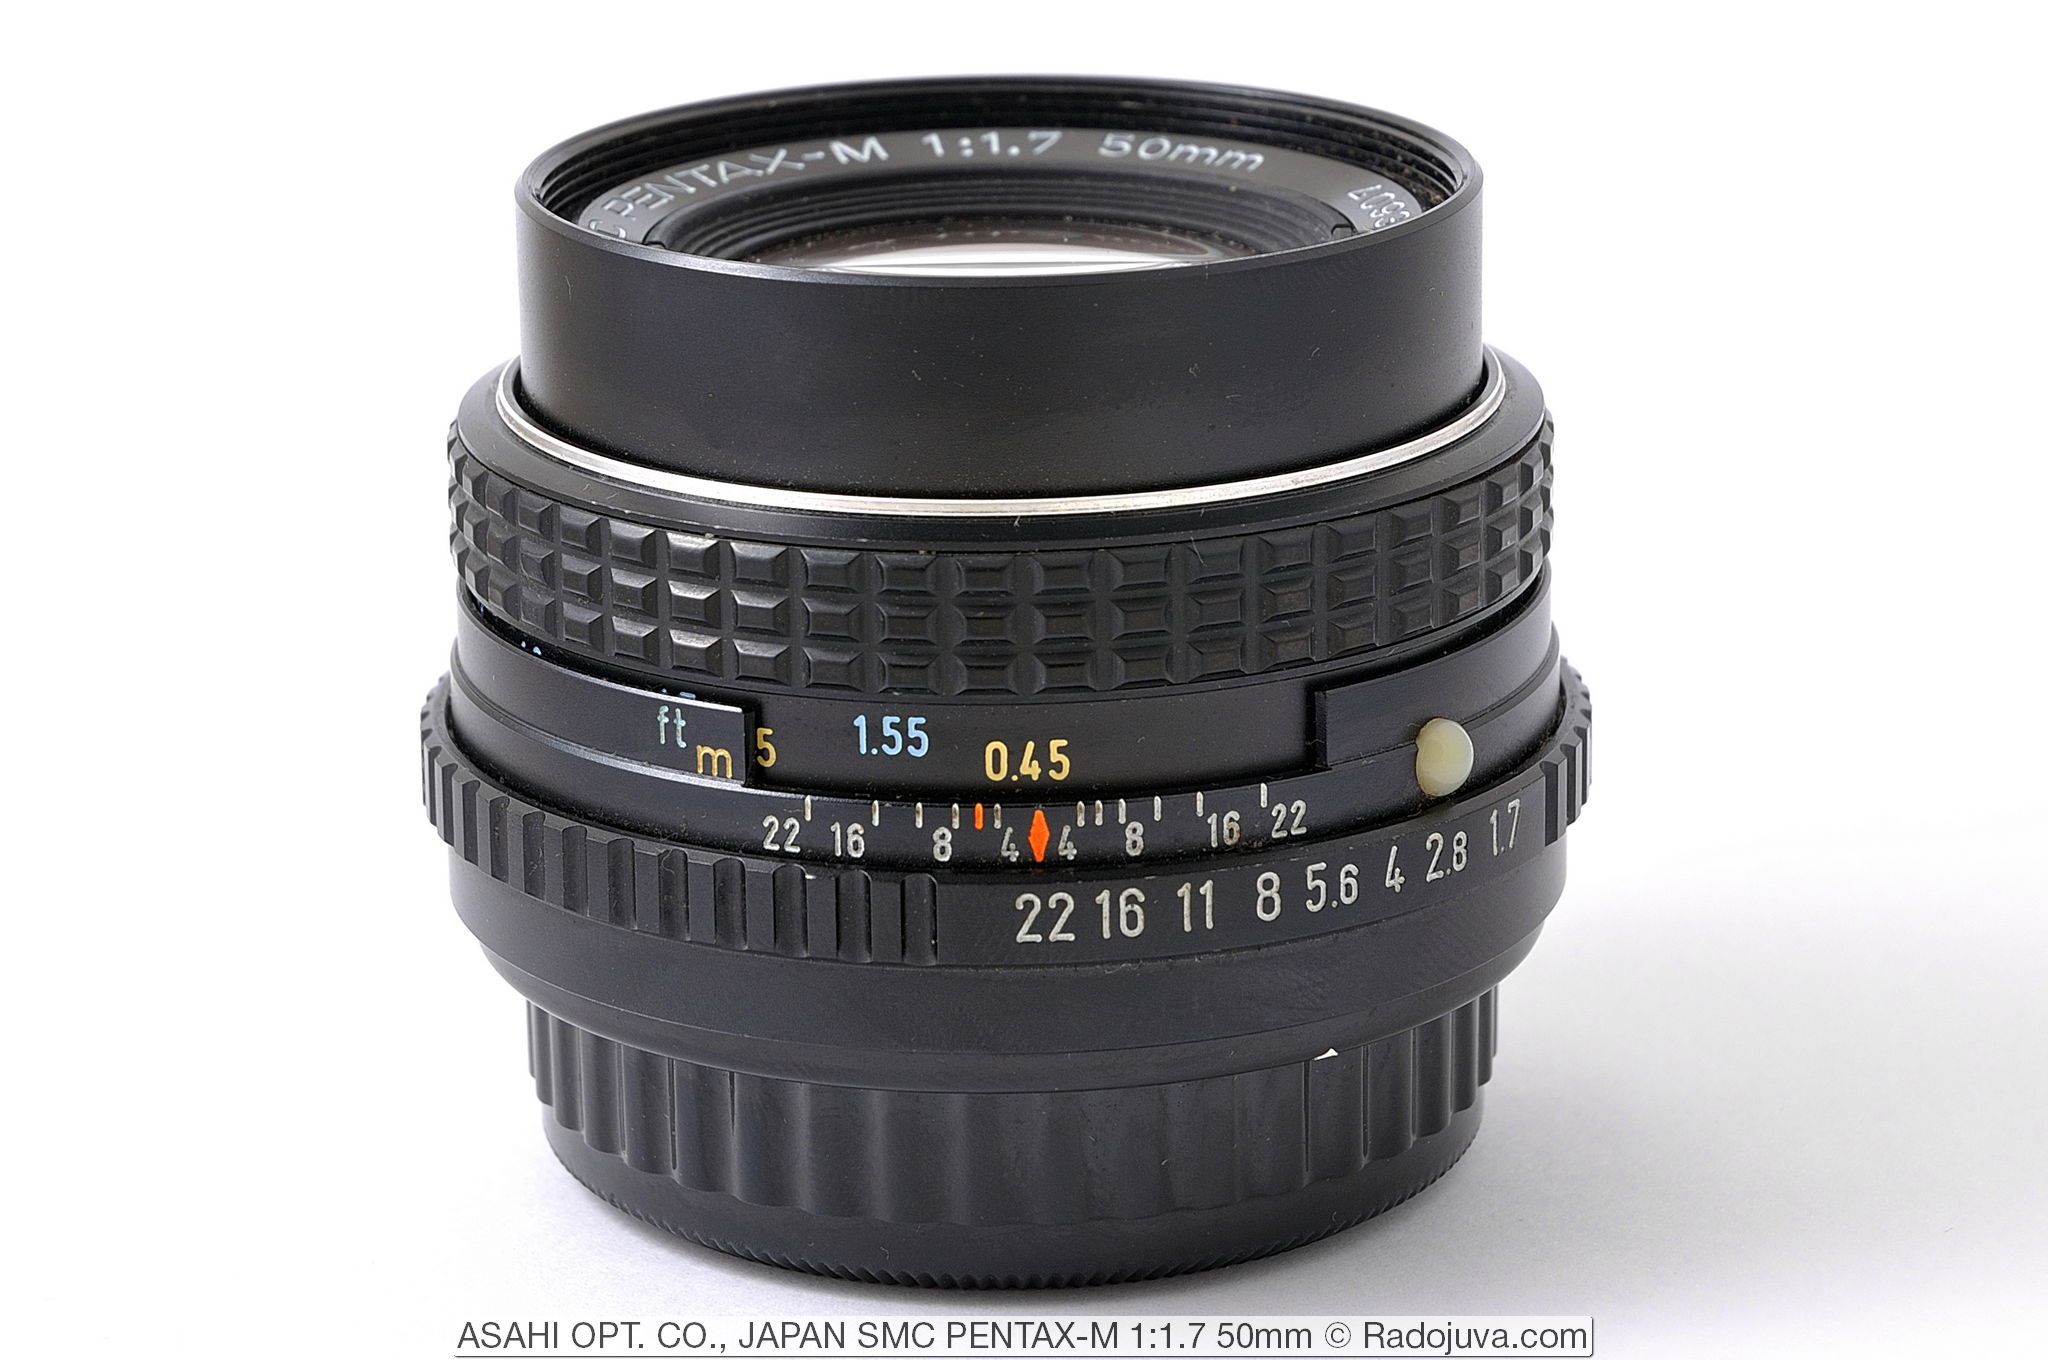 ASAHI OPT. CO., JAPAN SMC PENTAX-M 1:1.7 50mm